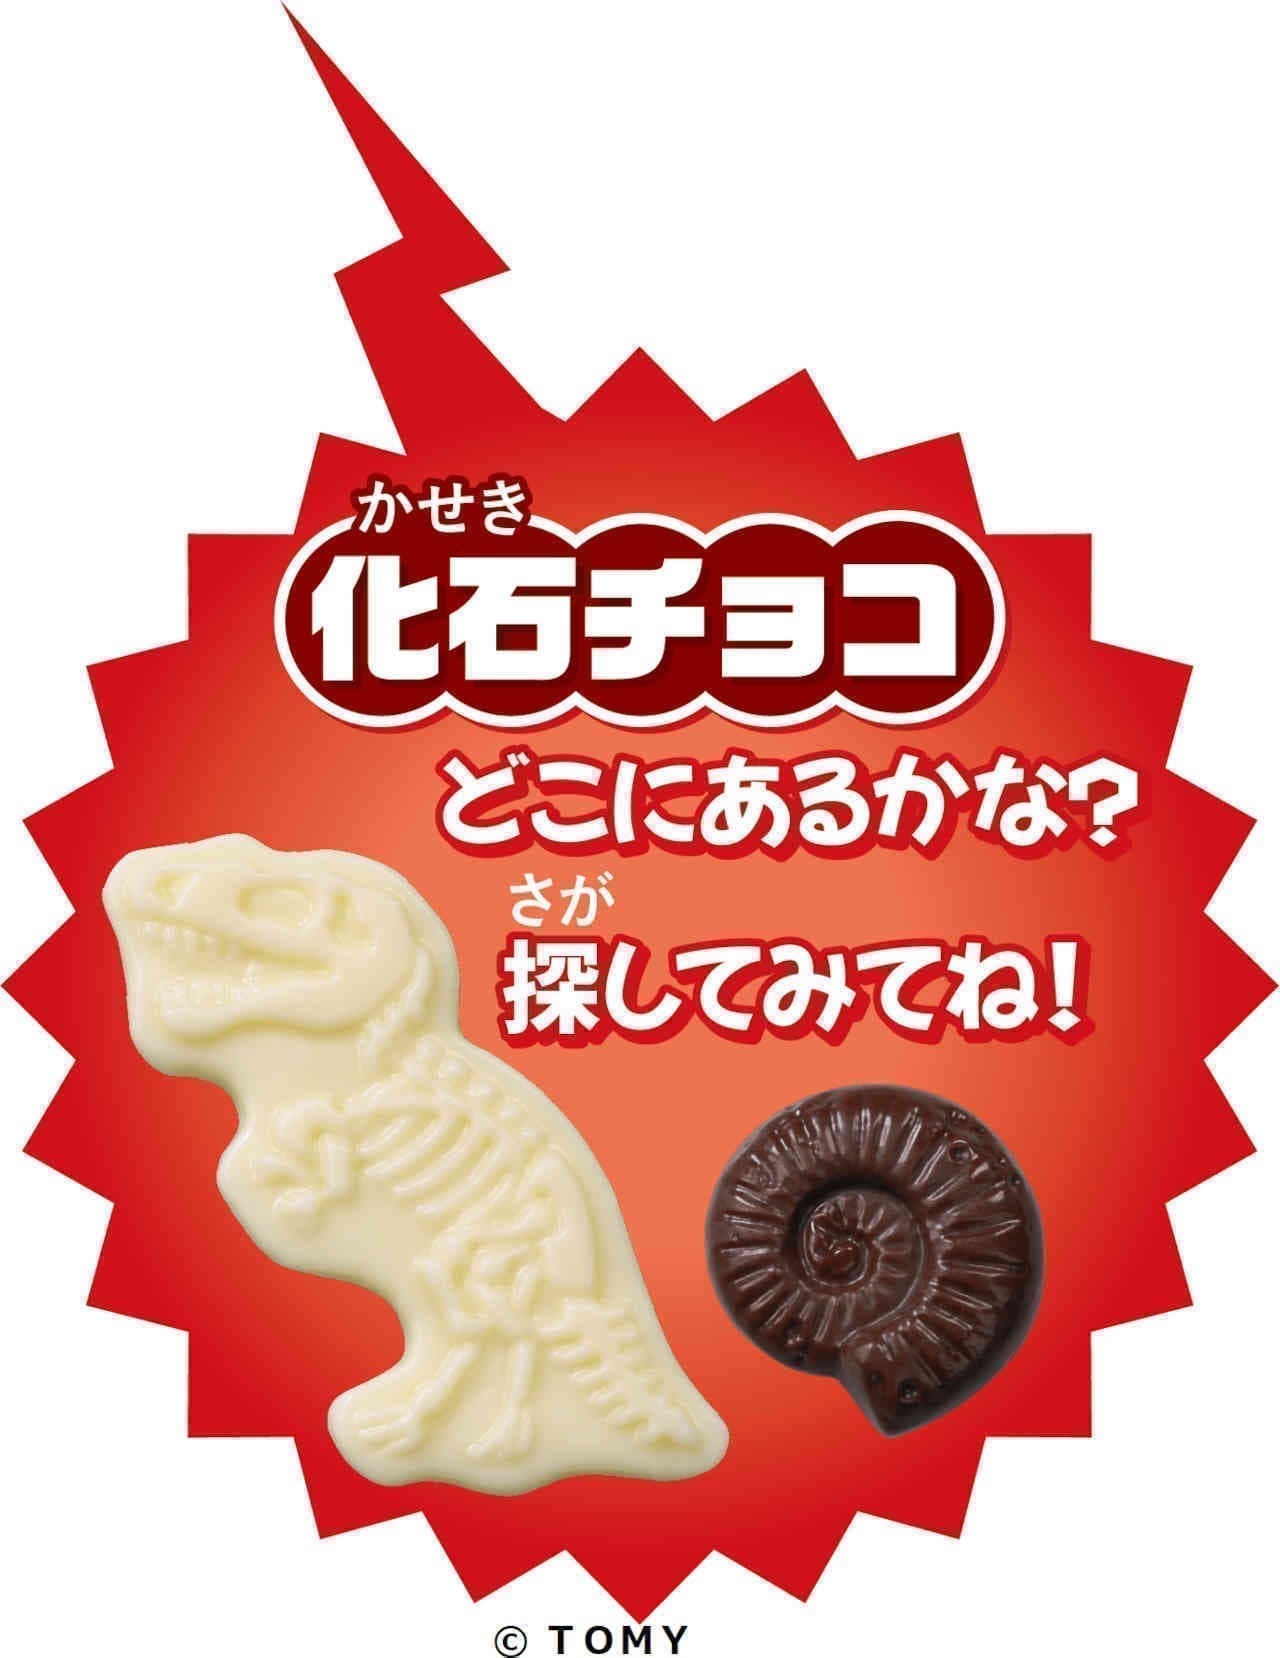 Thirty-One Ice Cream "Ania Kyoryu Cake" fossil chocolate